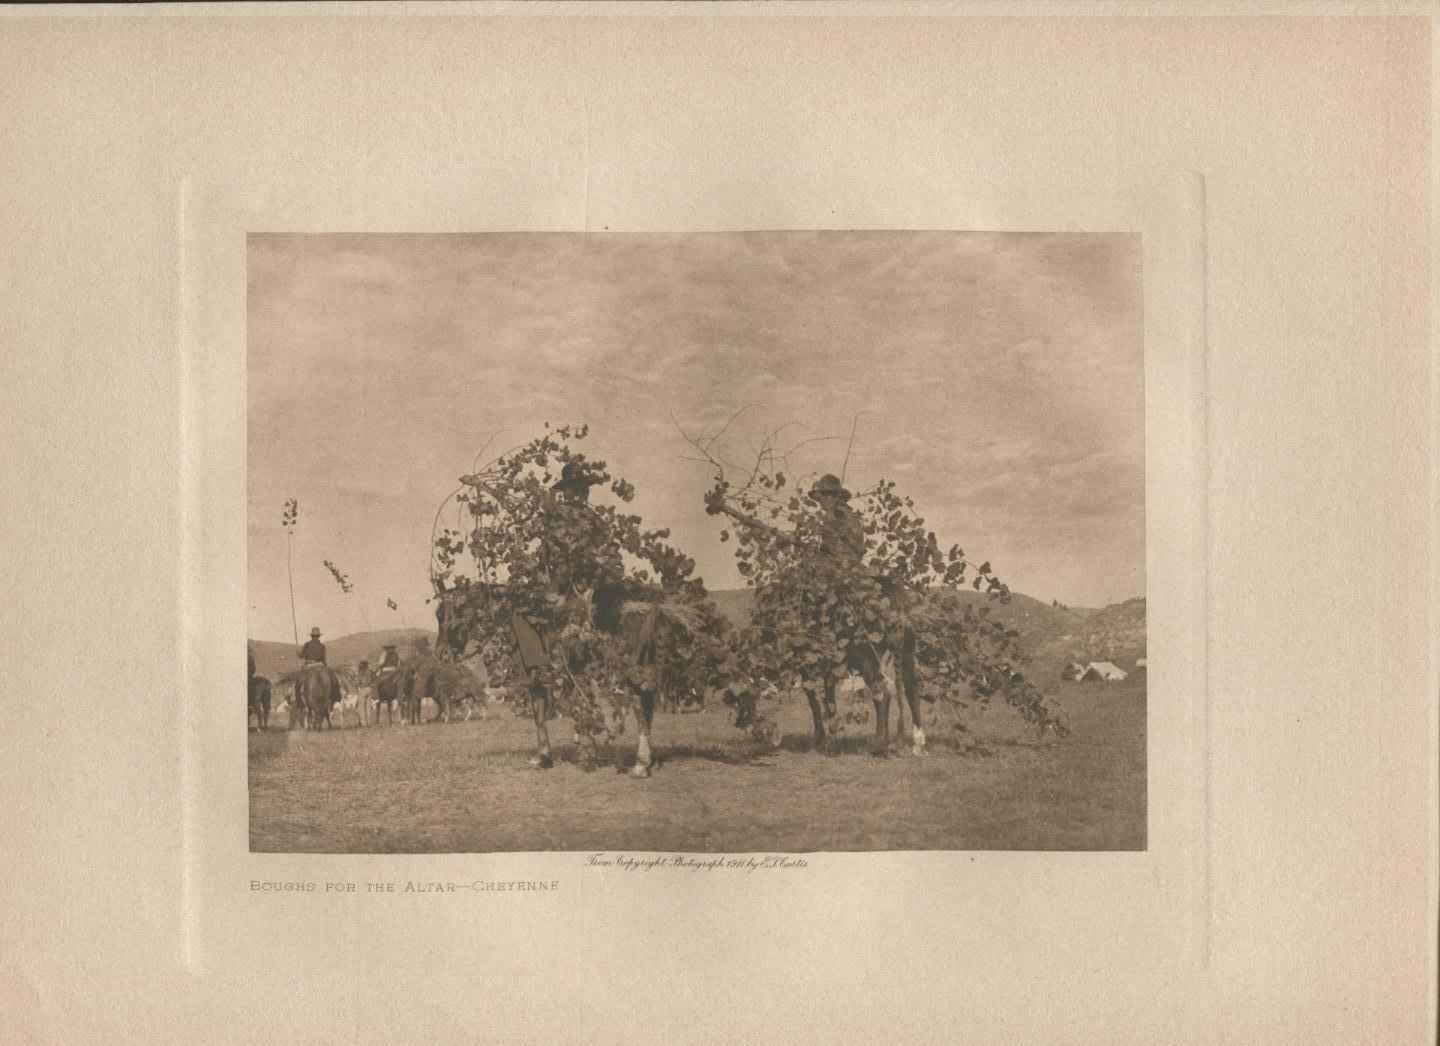 1911 Original Photogravure | Edward Curtis | Bough for the Altar | Cheyenne